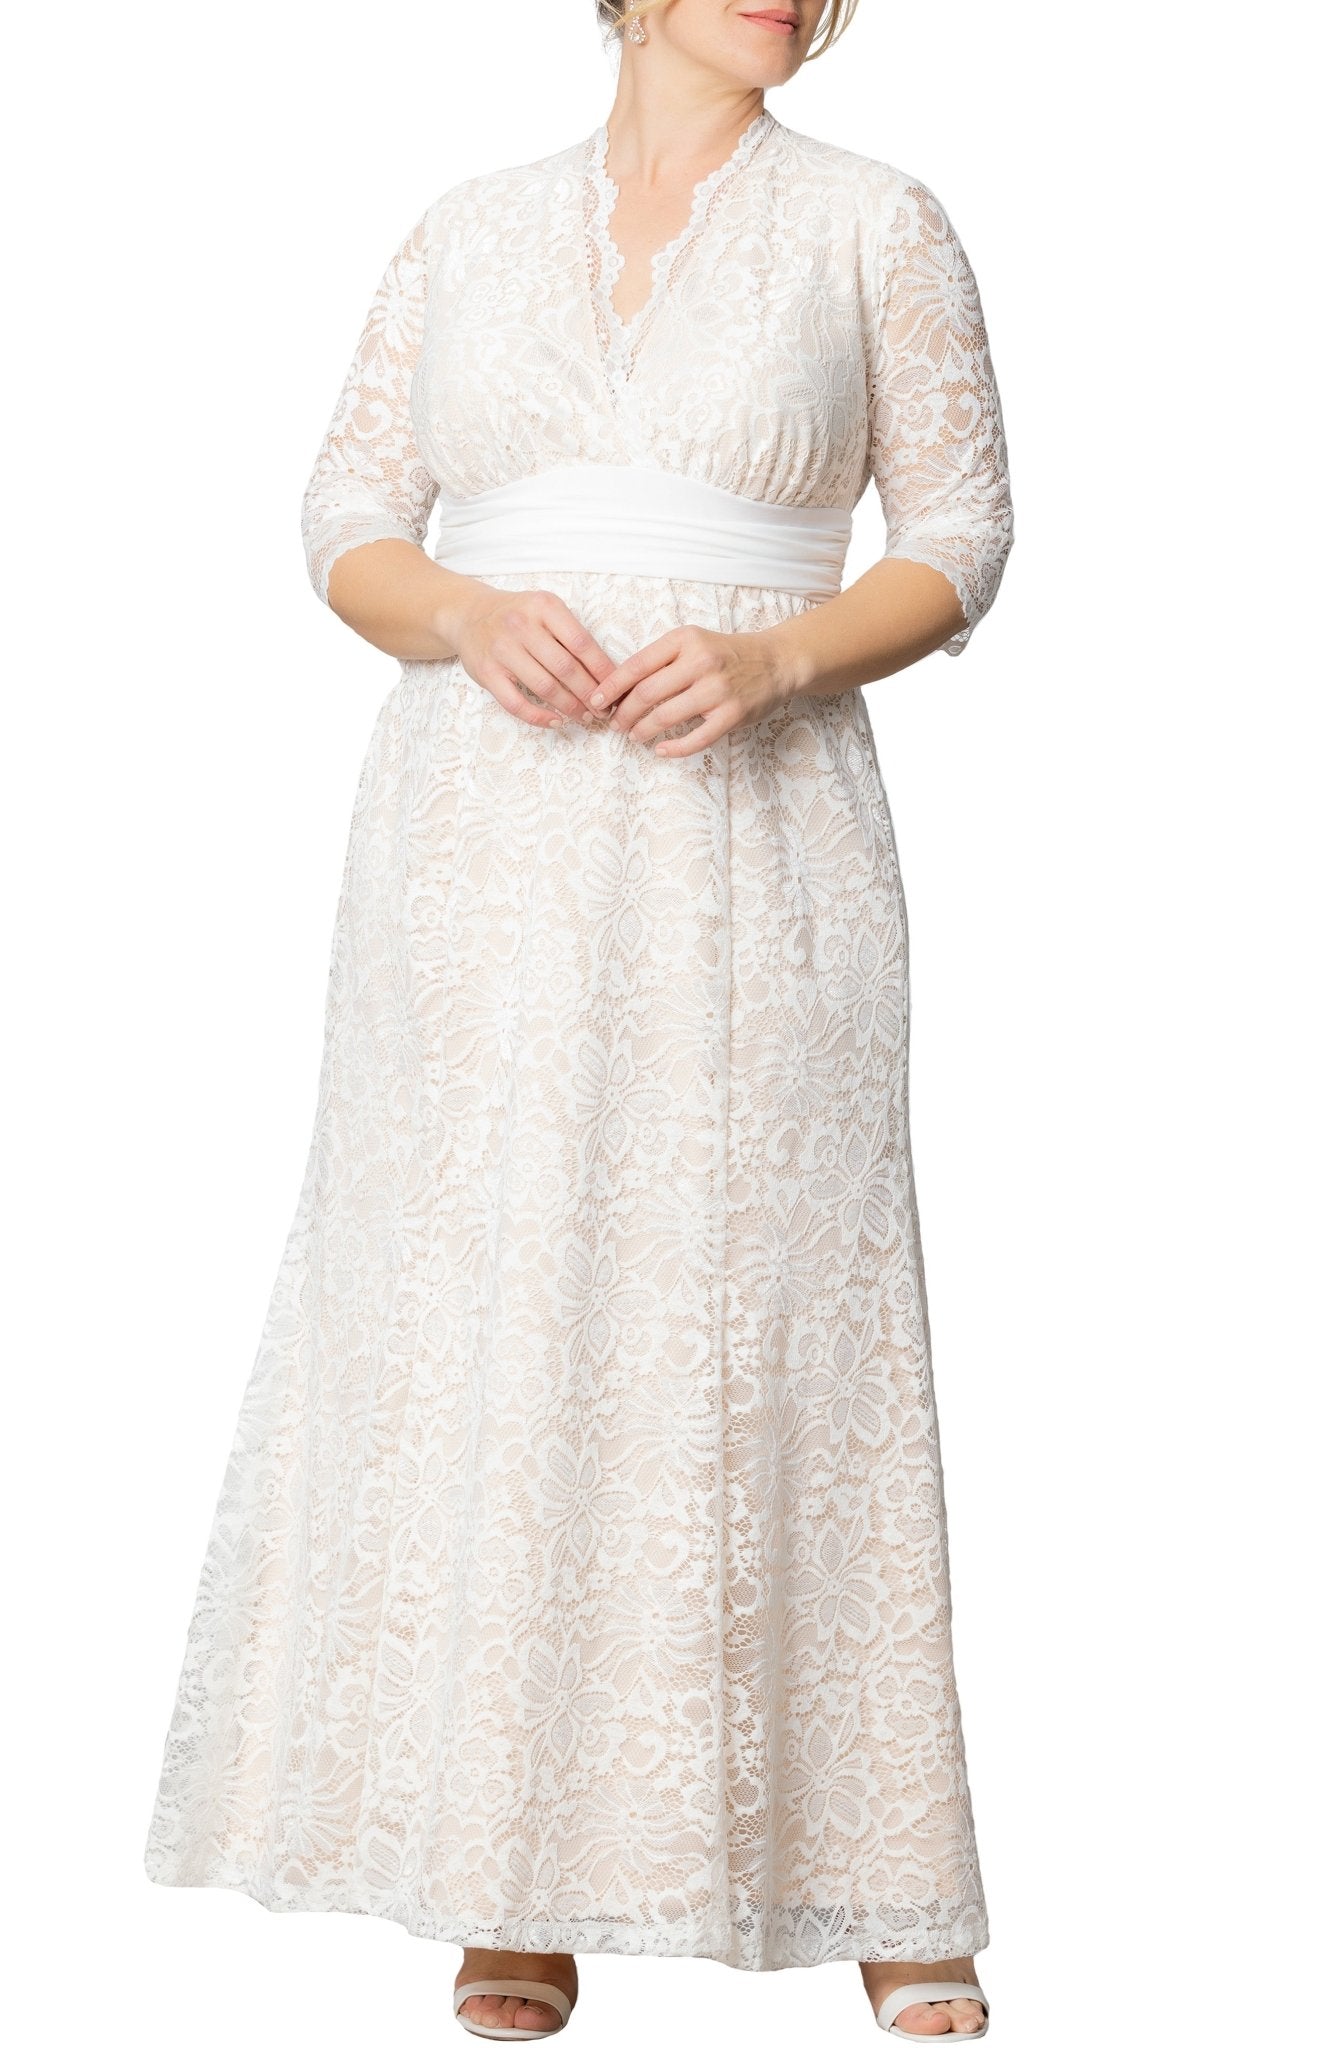 Amour Lace Wedding Gown - Plus - DressbarnDresses